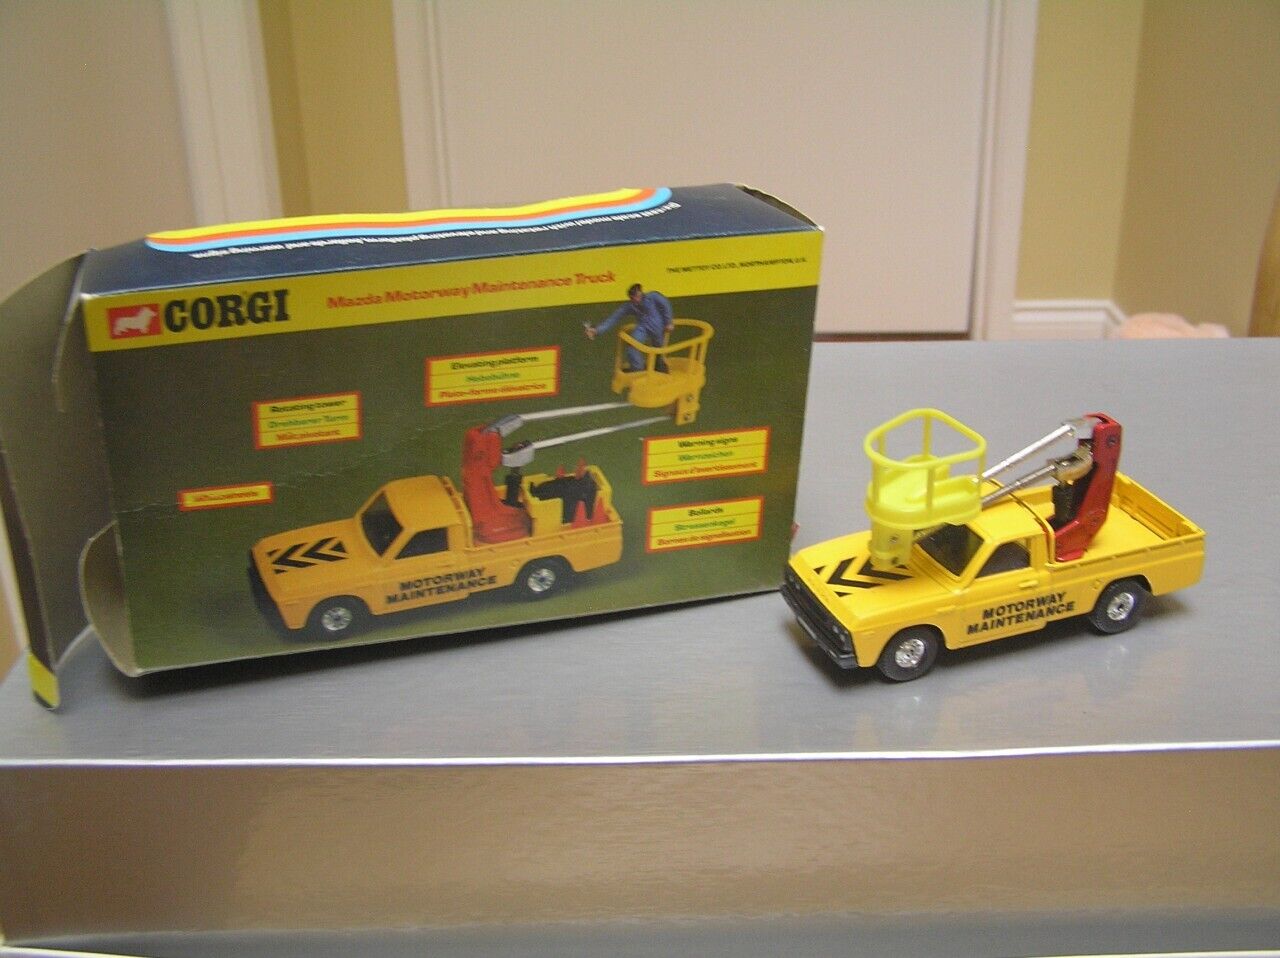 Corgi Toys 413 Mazda Motorway Maintenance truck Mint in Box